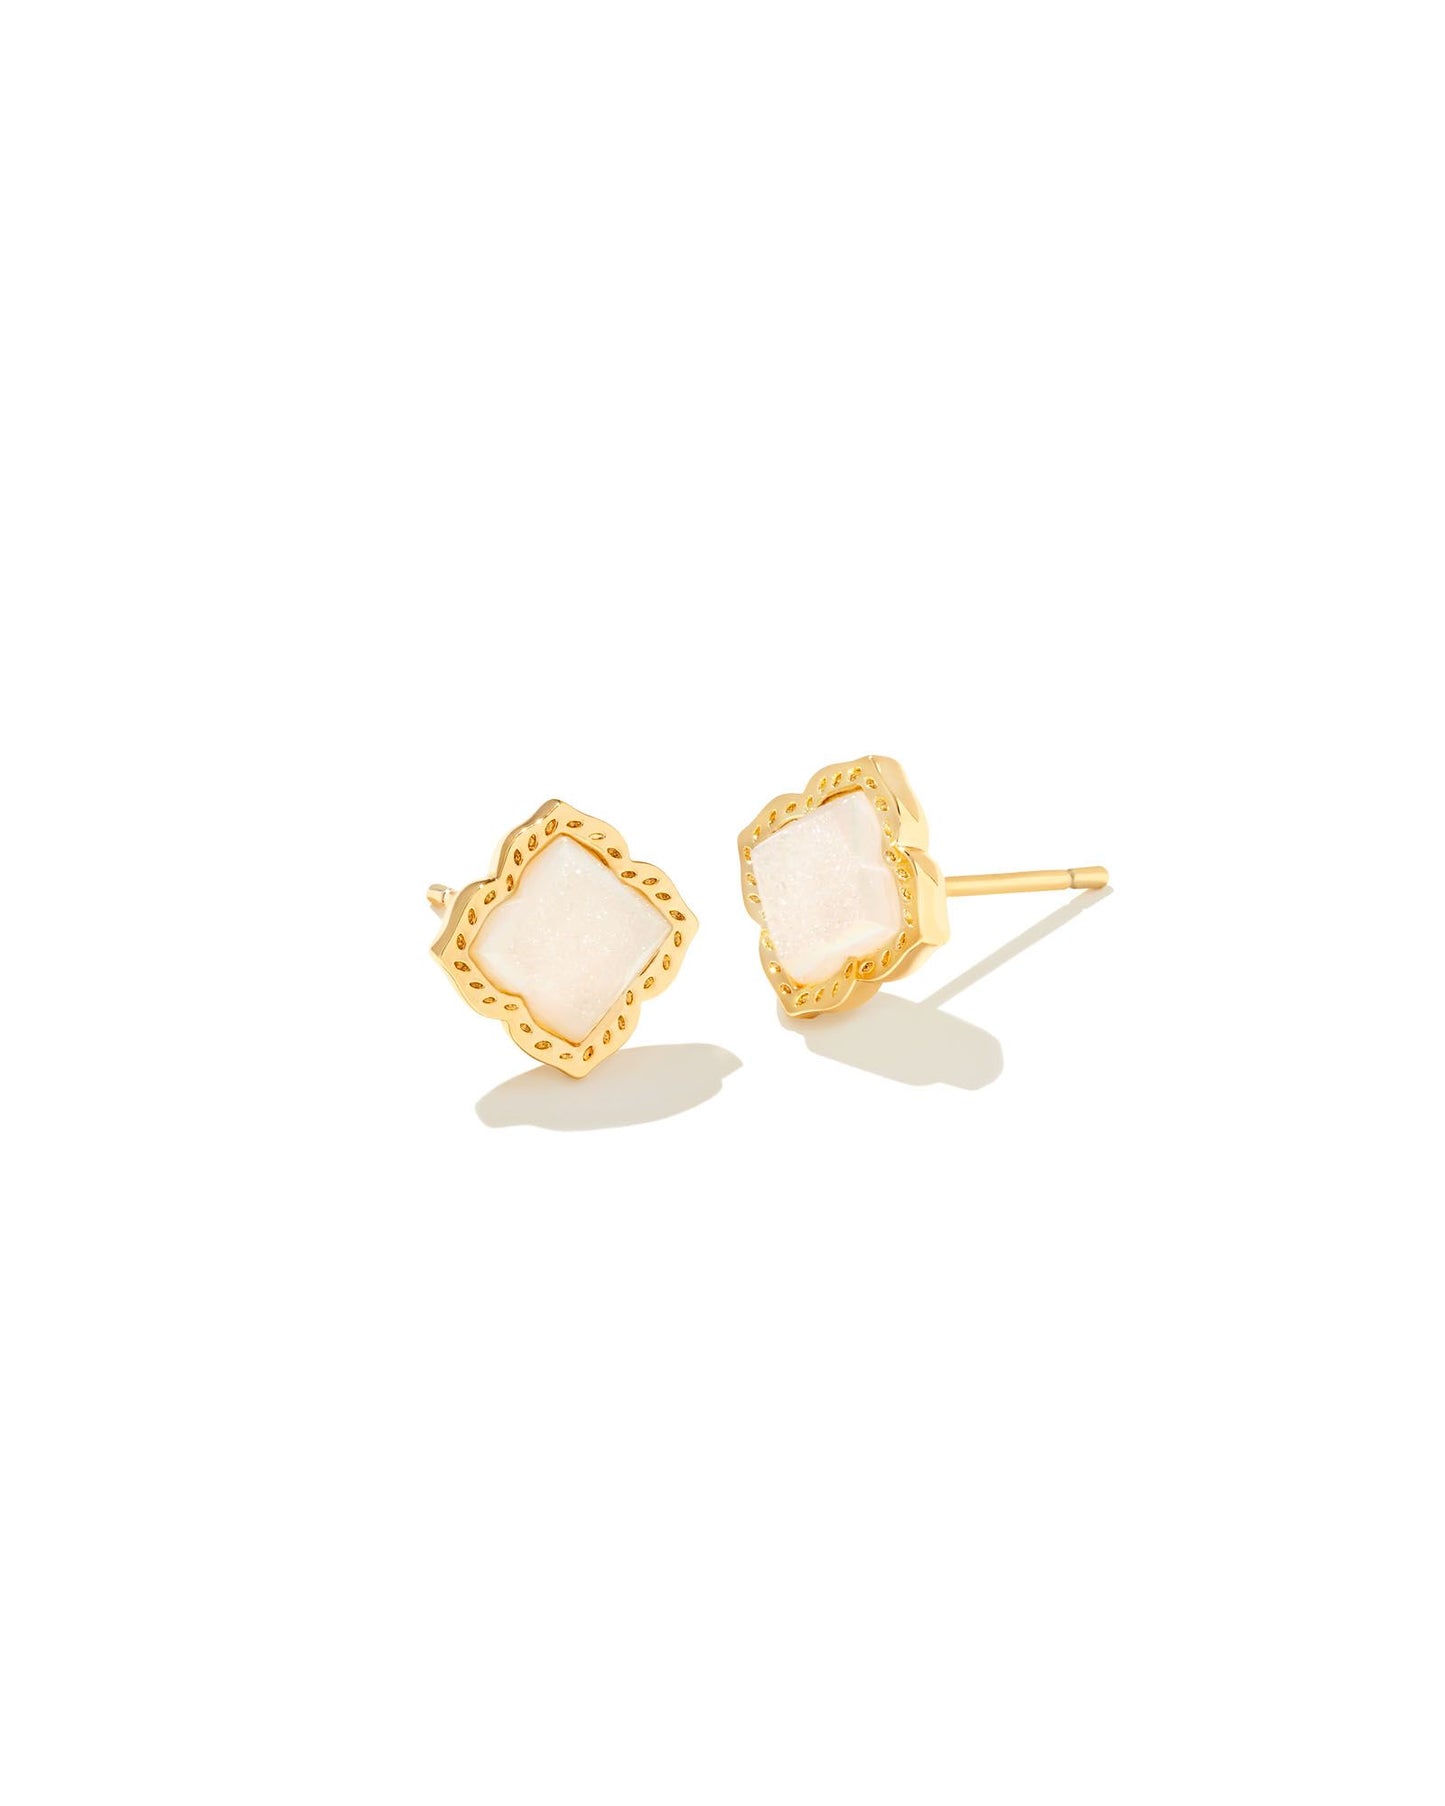 Kendra Scott Mallory Stud Earrings - Gold Iridescent Drusy